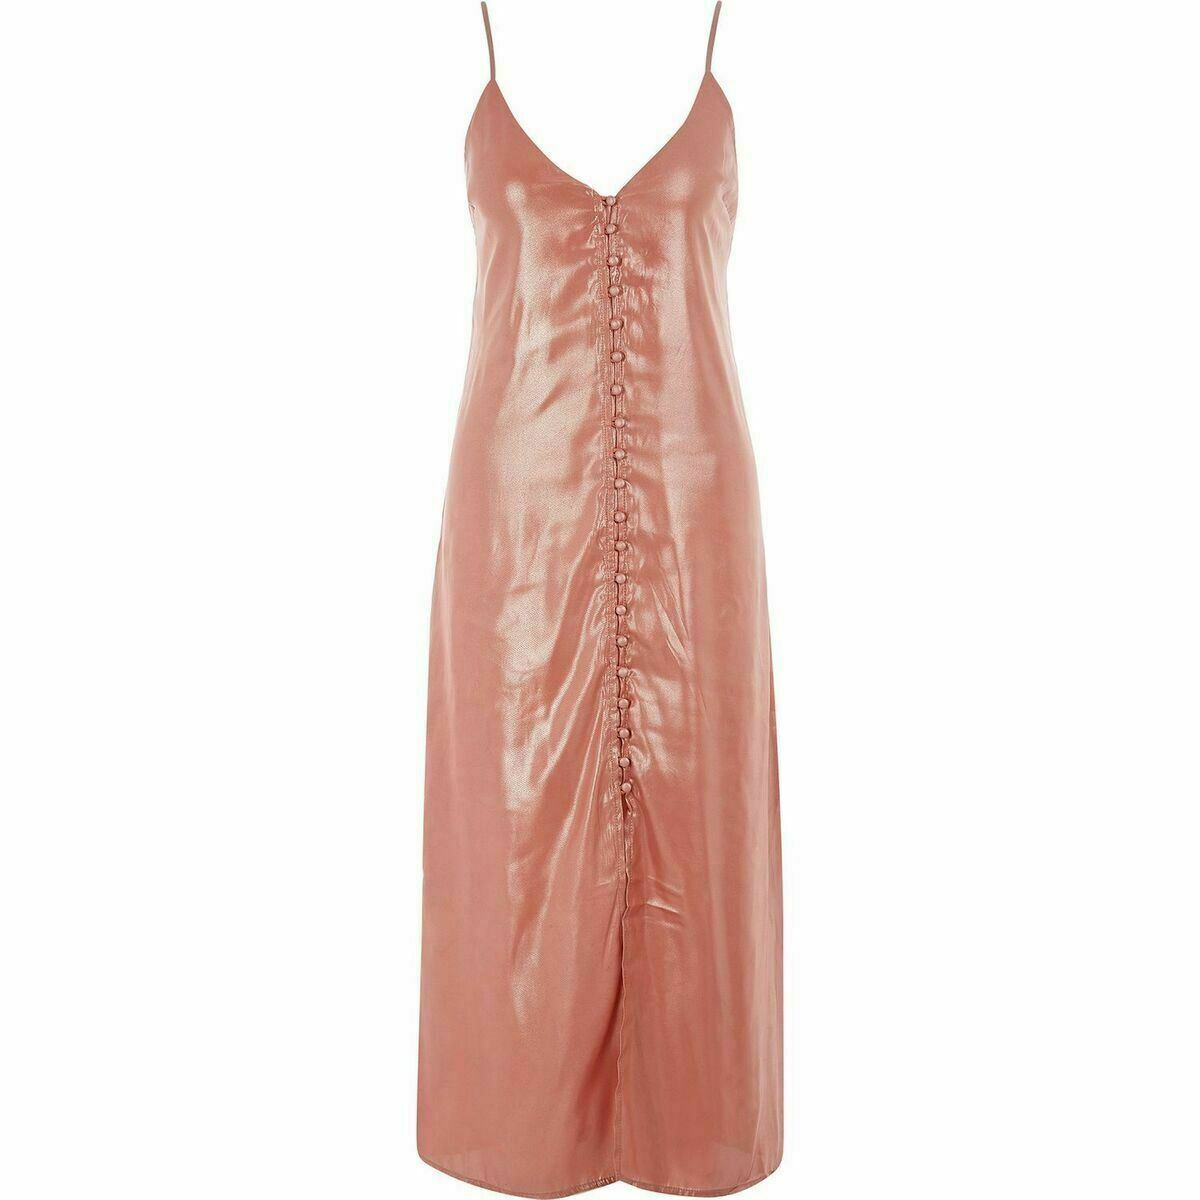 BARDOT Women's High Shine Midi Slip Dress, Coral Pink, size UK 10